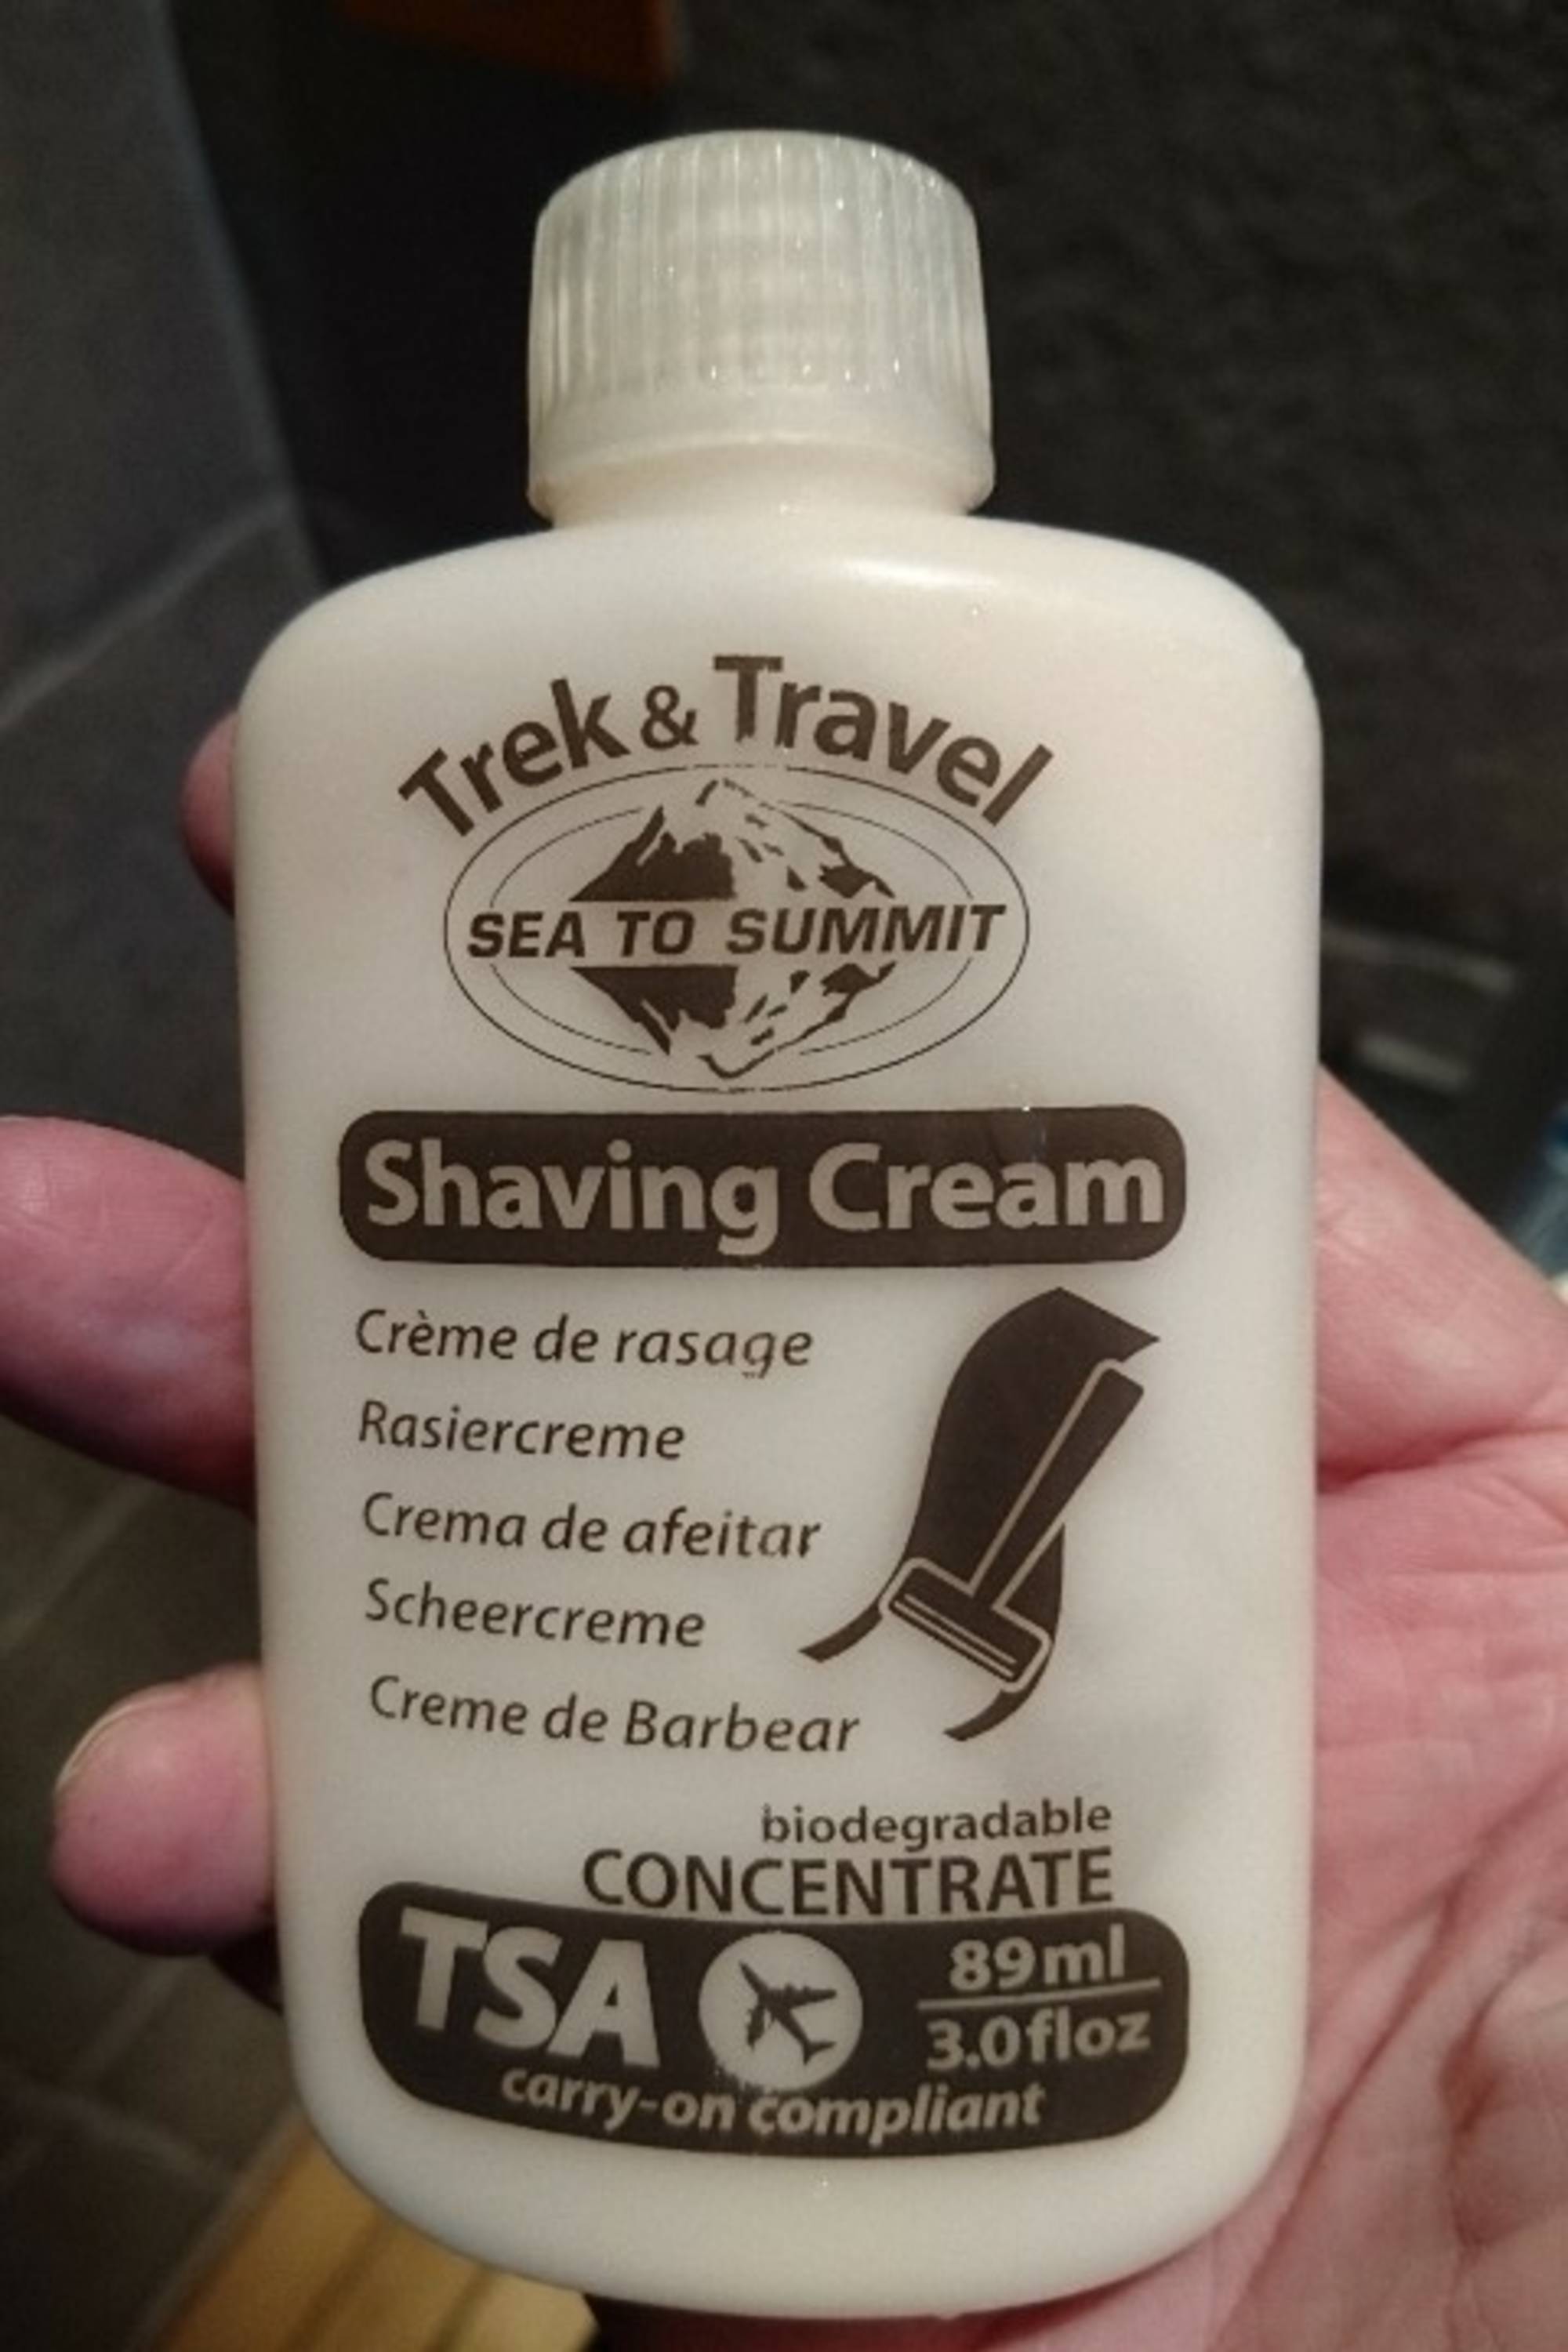 TREK & TRAVEL - Sea to summit - Crème de rasage